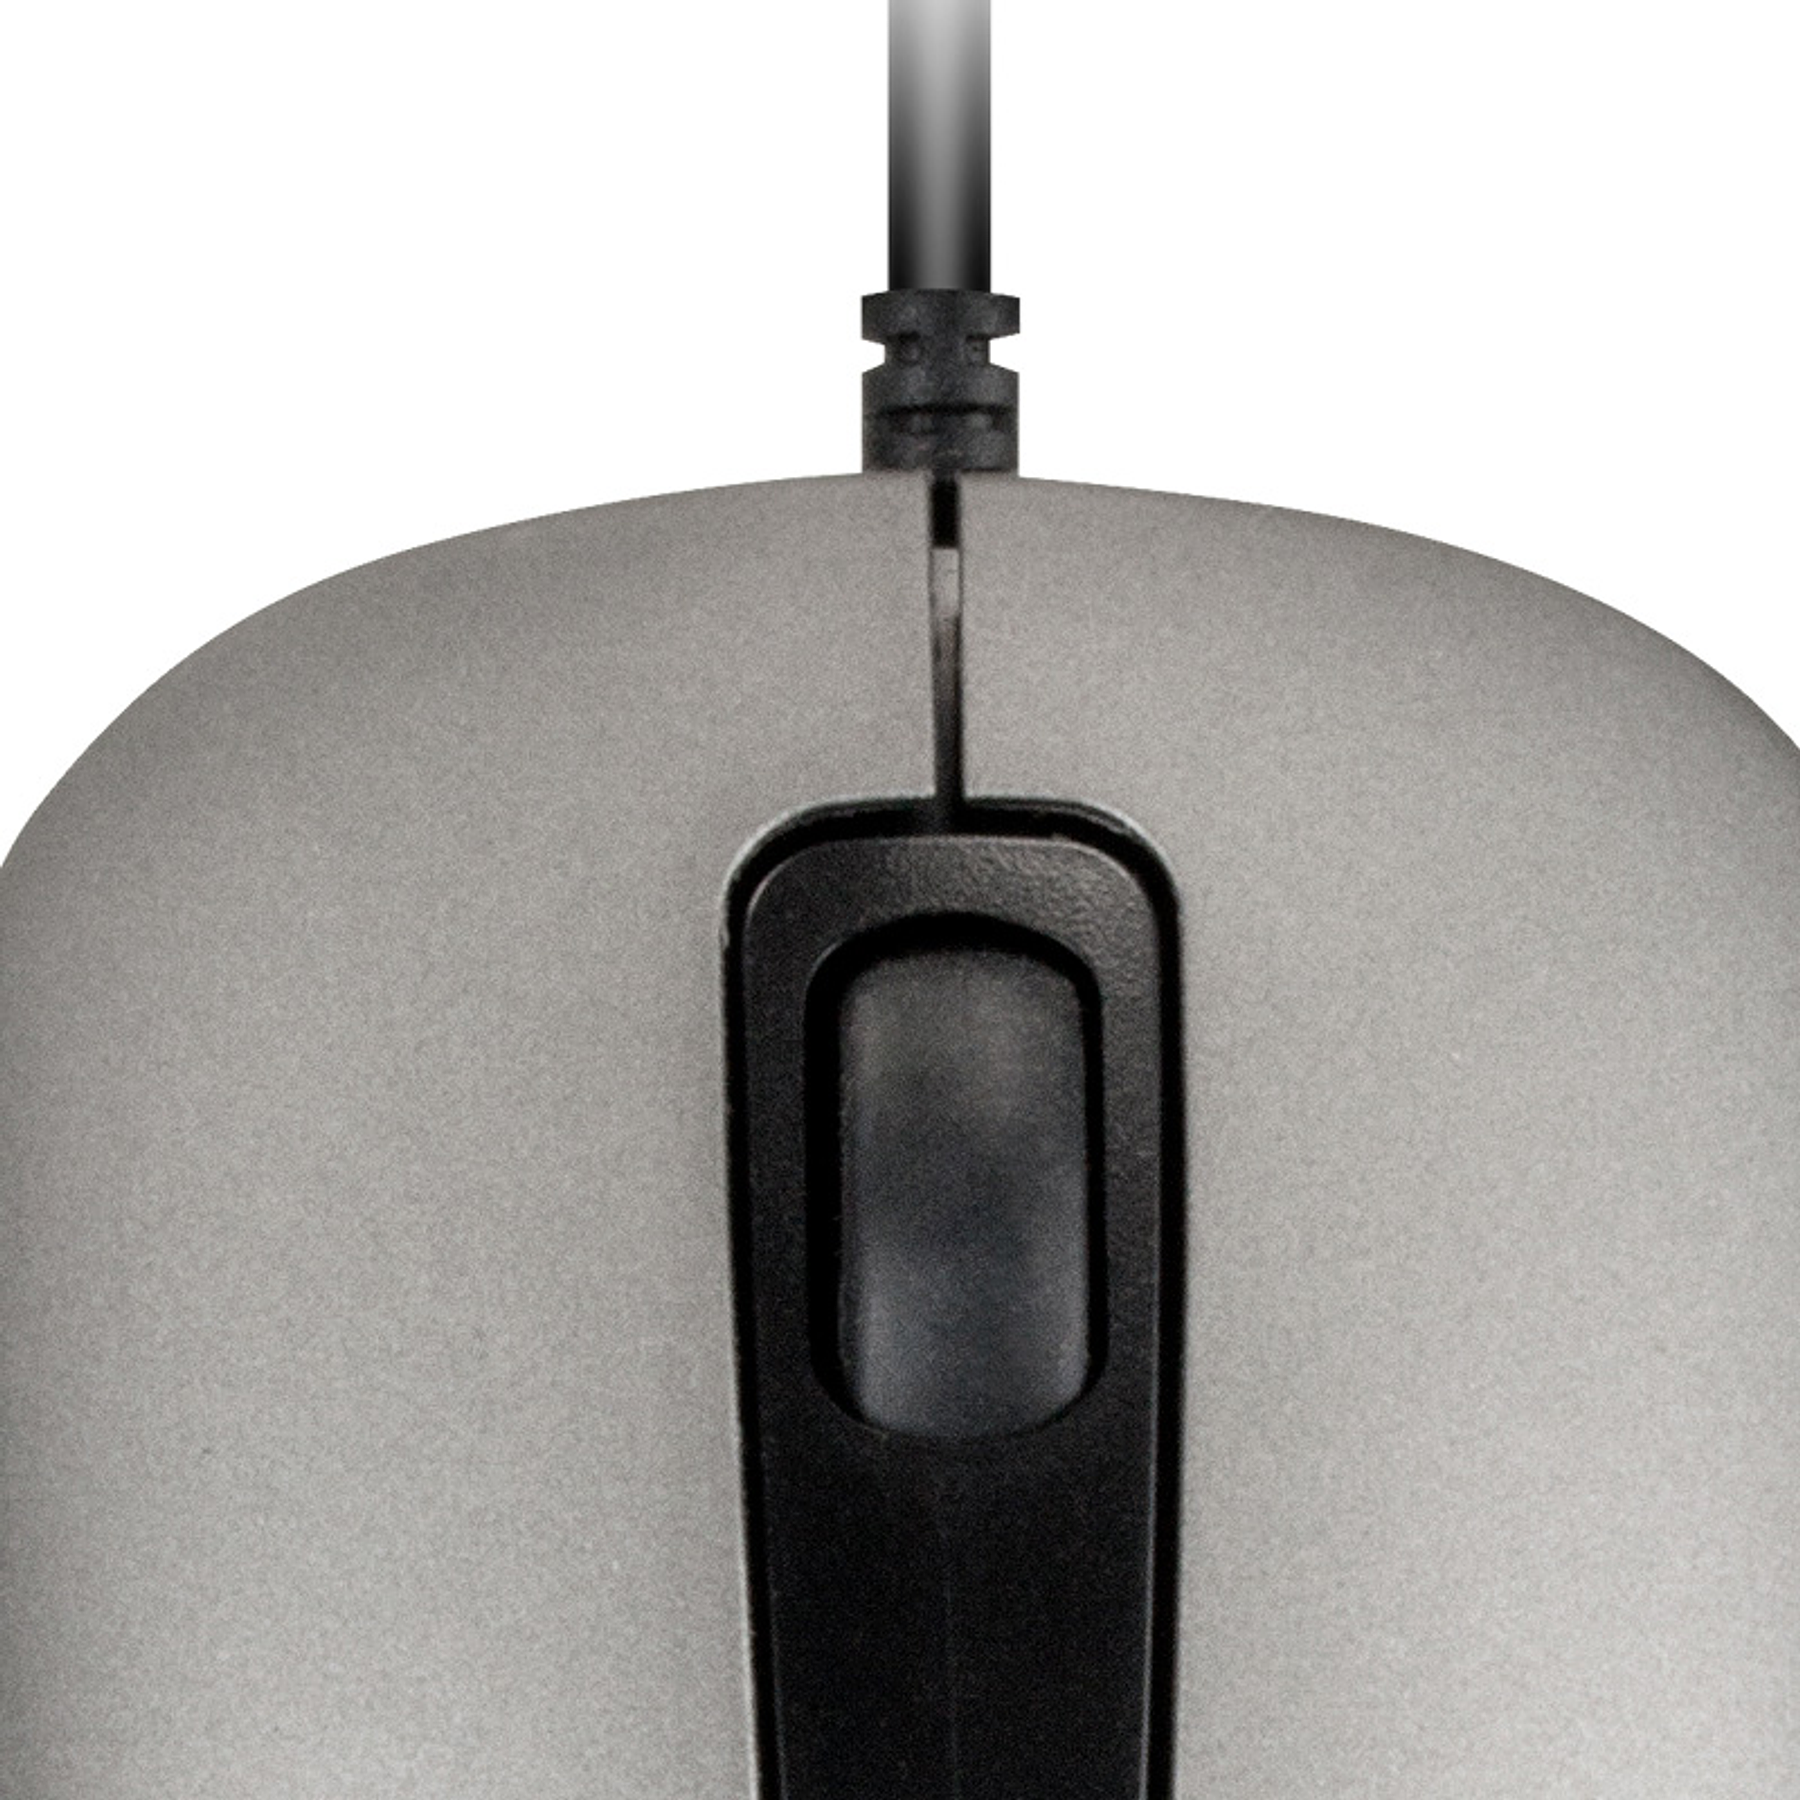 Klip Xtrem Mouse USB 1000/1600 DPI- Ambidiestro